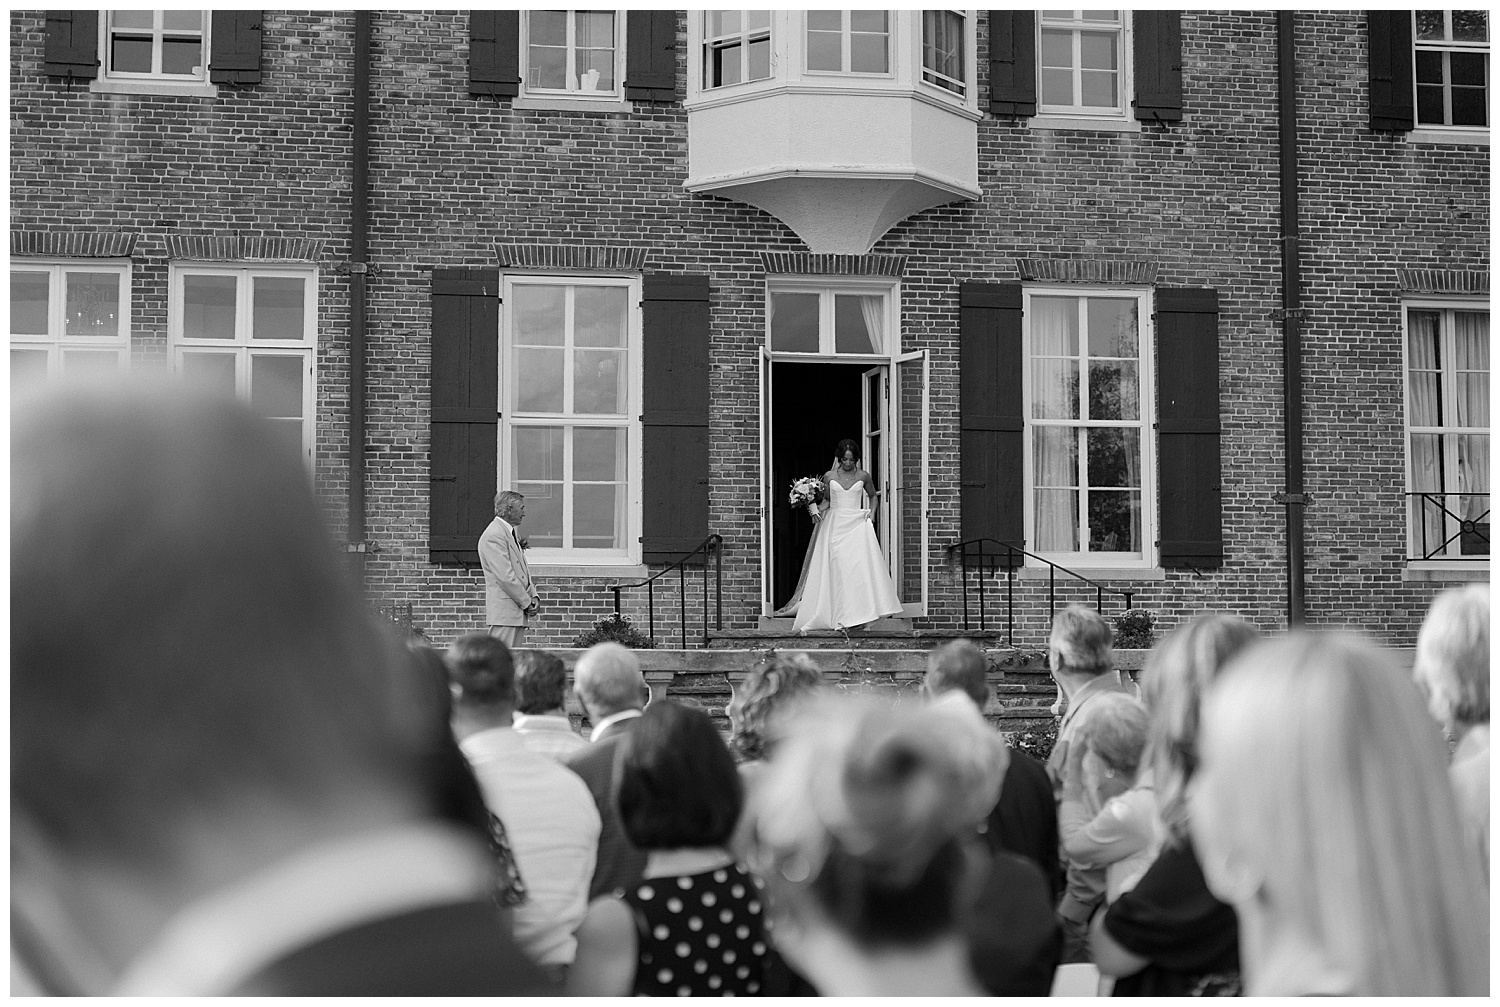 Bride preparing to walk down isle in black and white photo